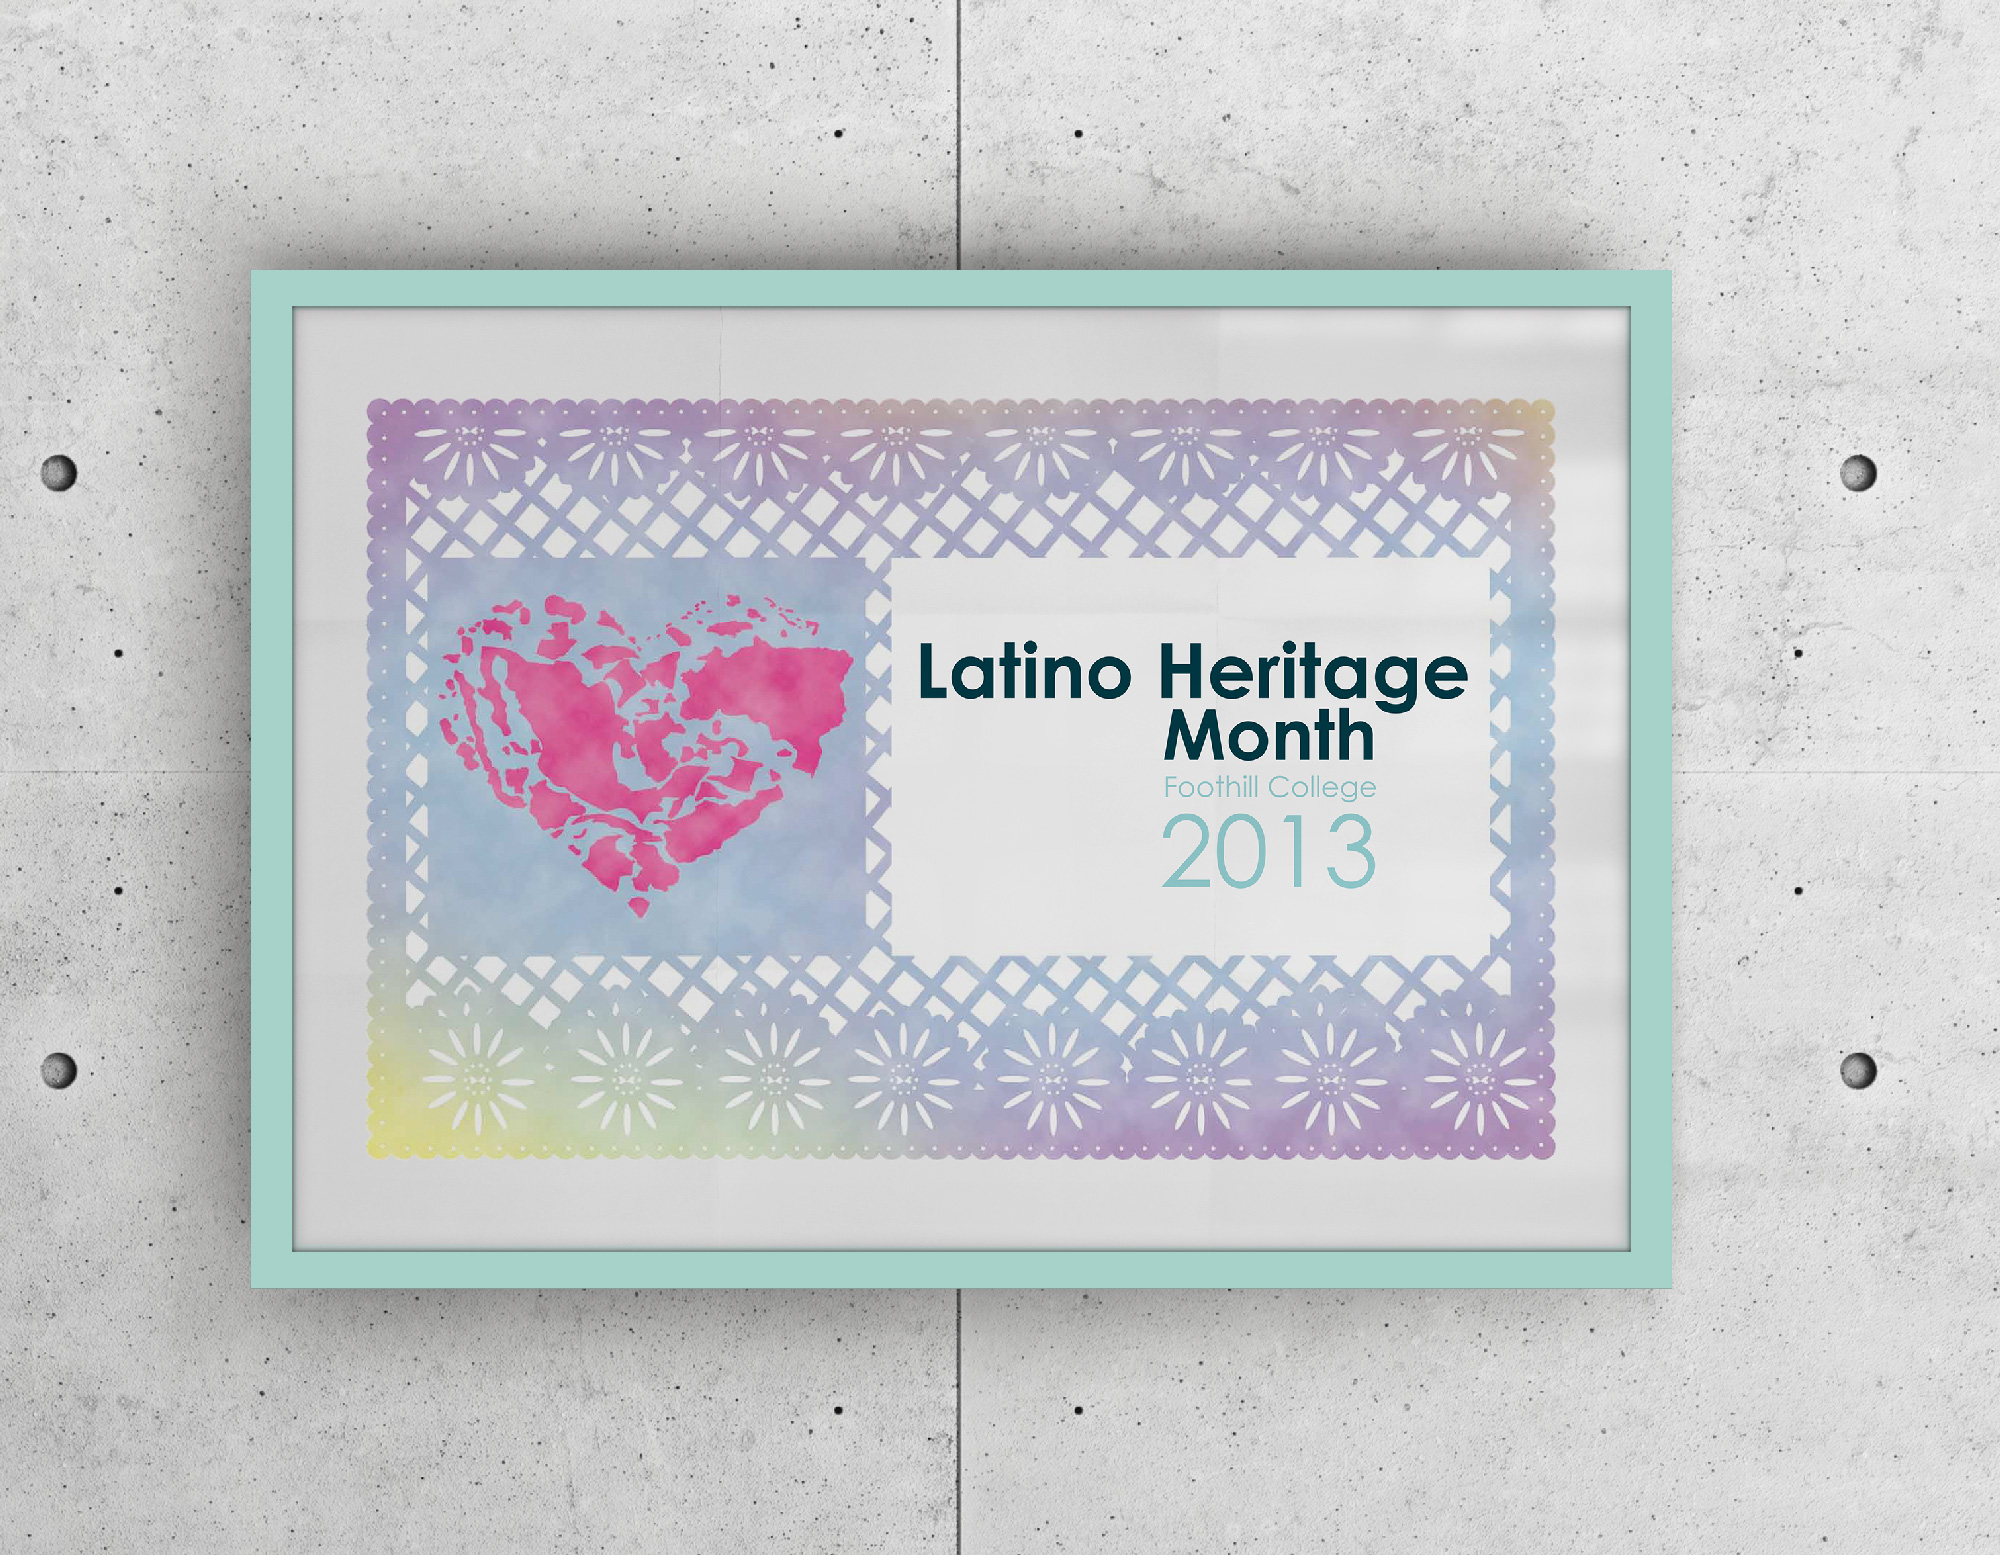 Latino heritage month